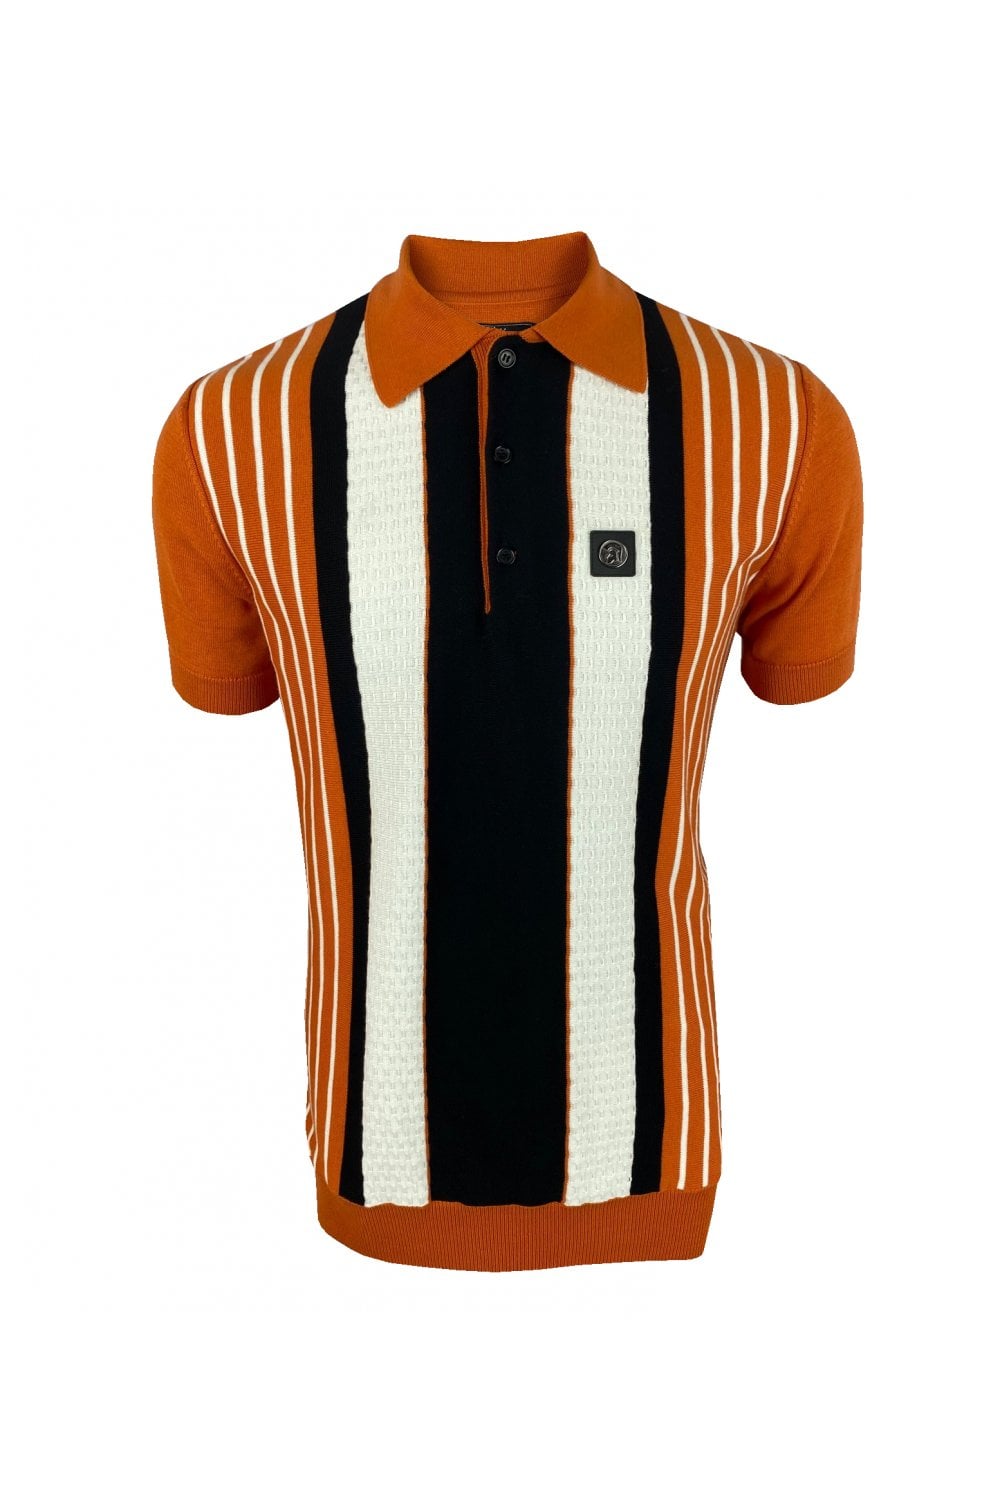 TROJAN Textured Stripe Fine Gauge Polo TR/8764, orange